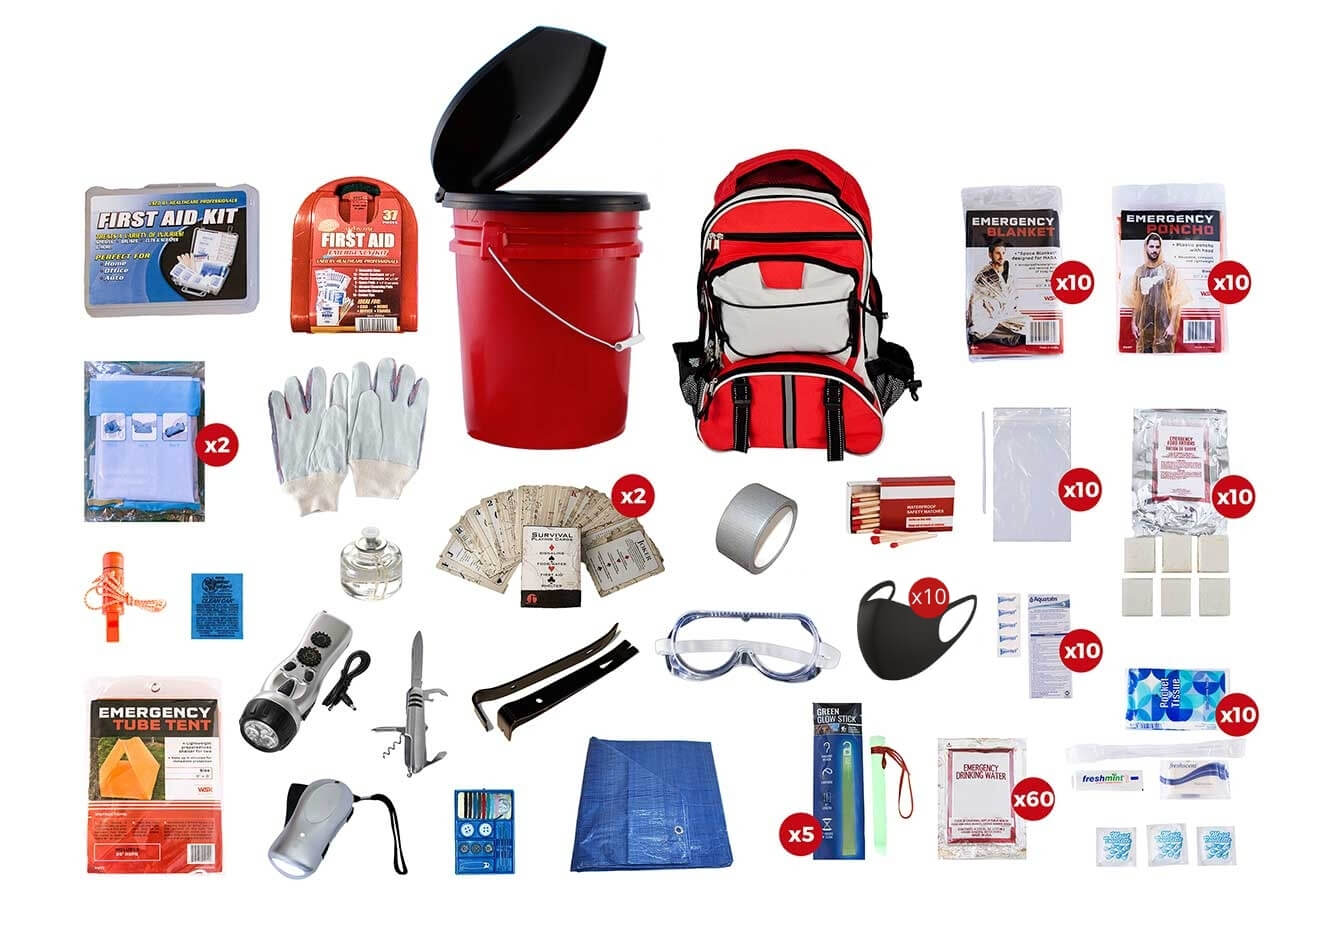 Brandi Mini Emergency Kit Red